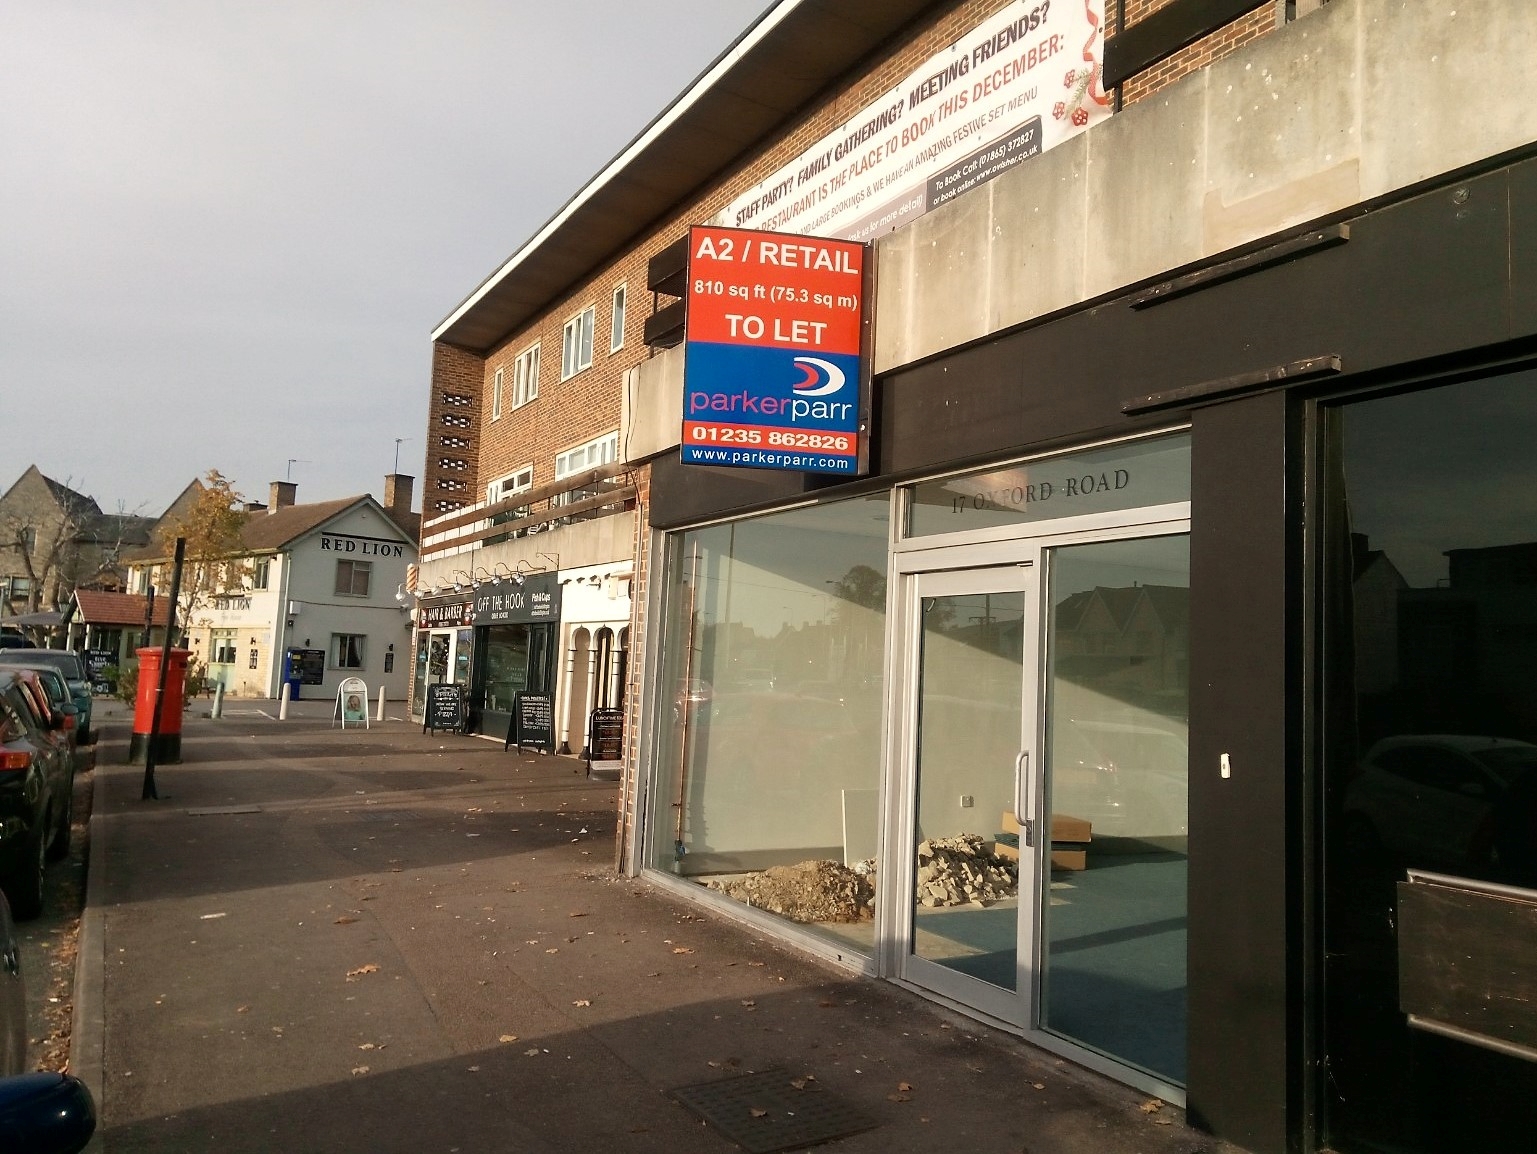 15 Oxford Road Kidlington Shop A2 Retail to let